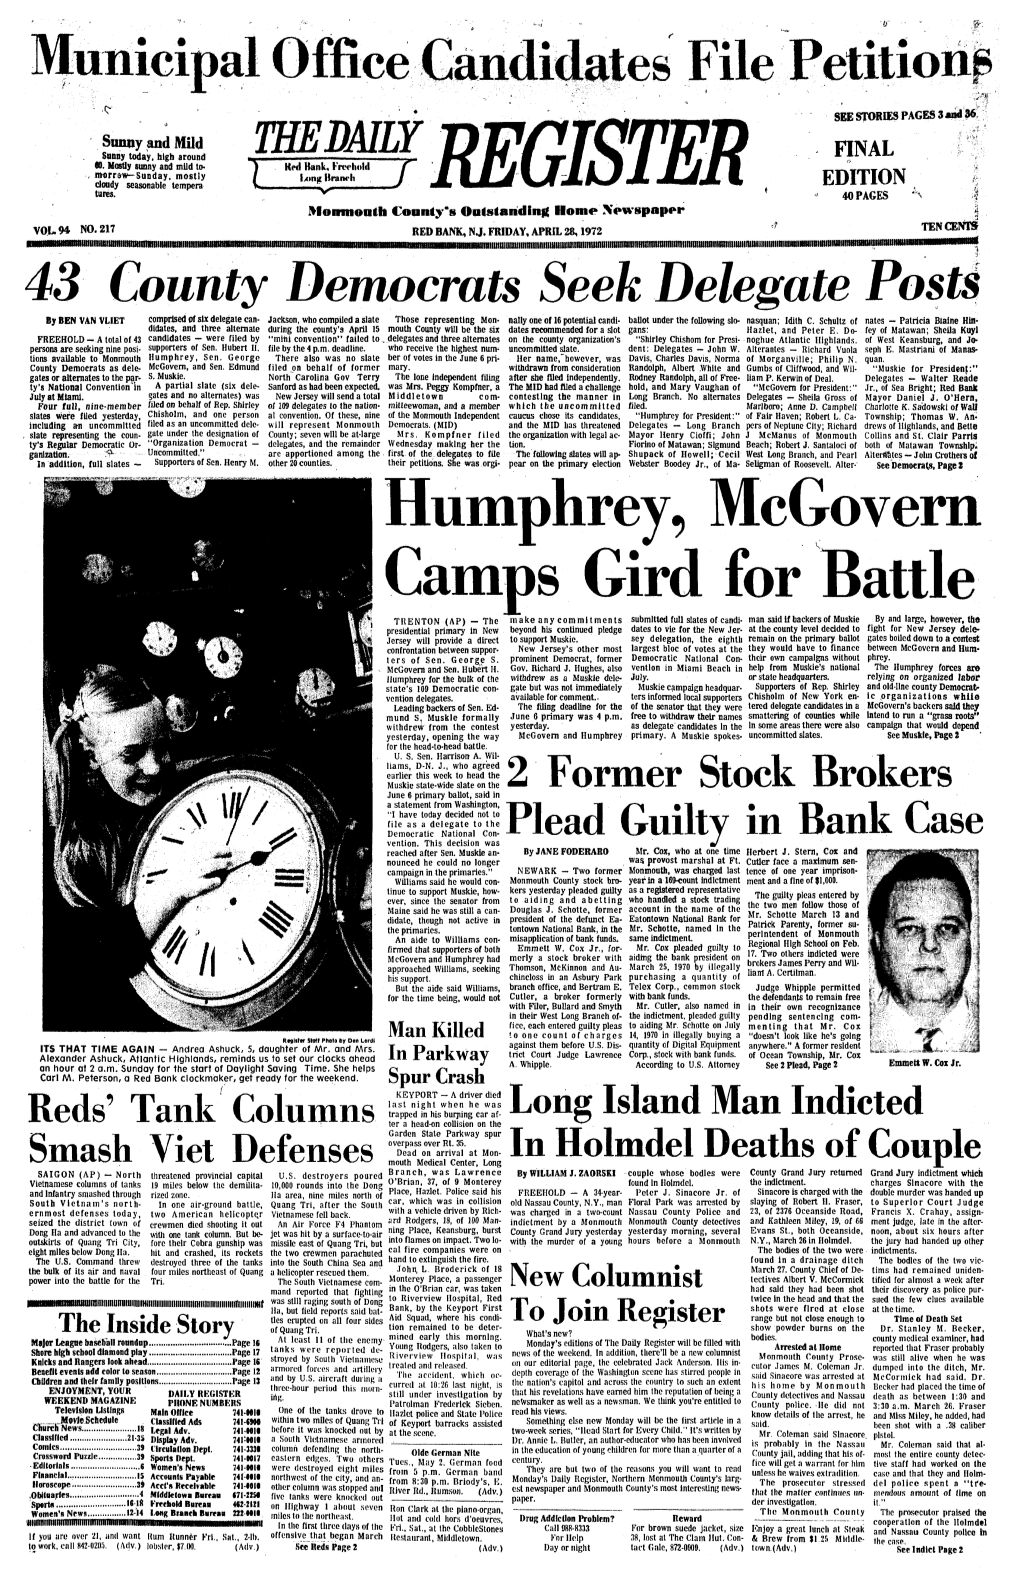 Humphrey, Mcgovern Camps Gird for Battle